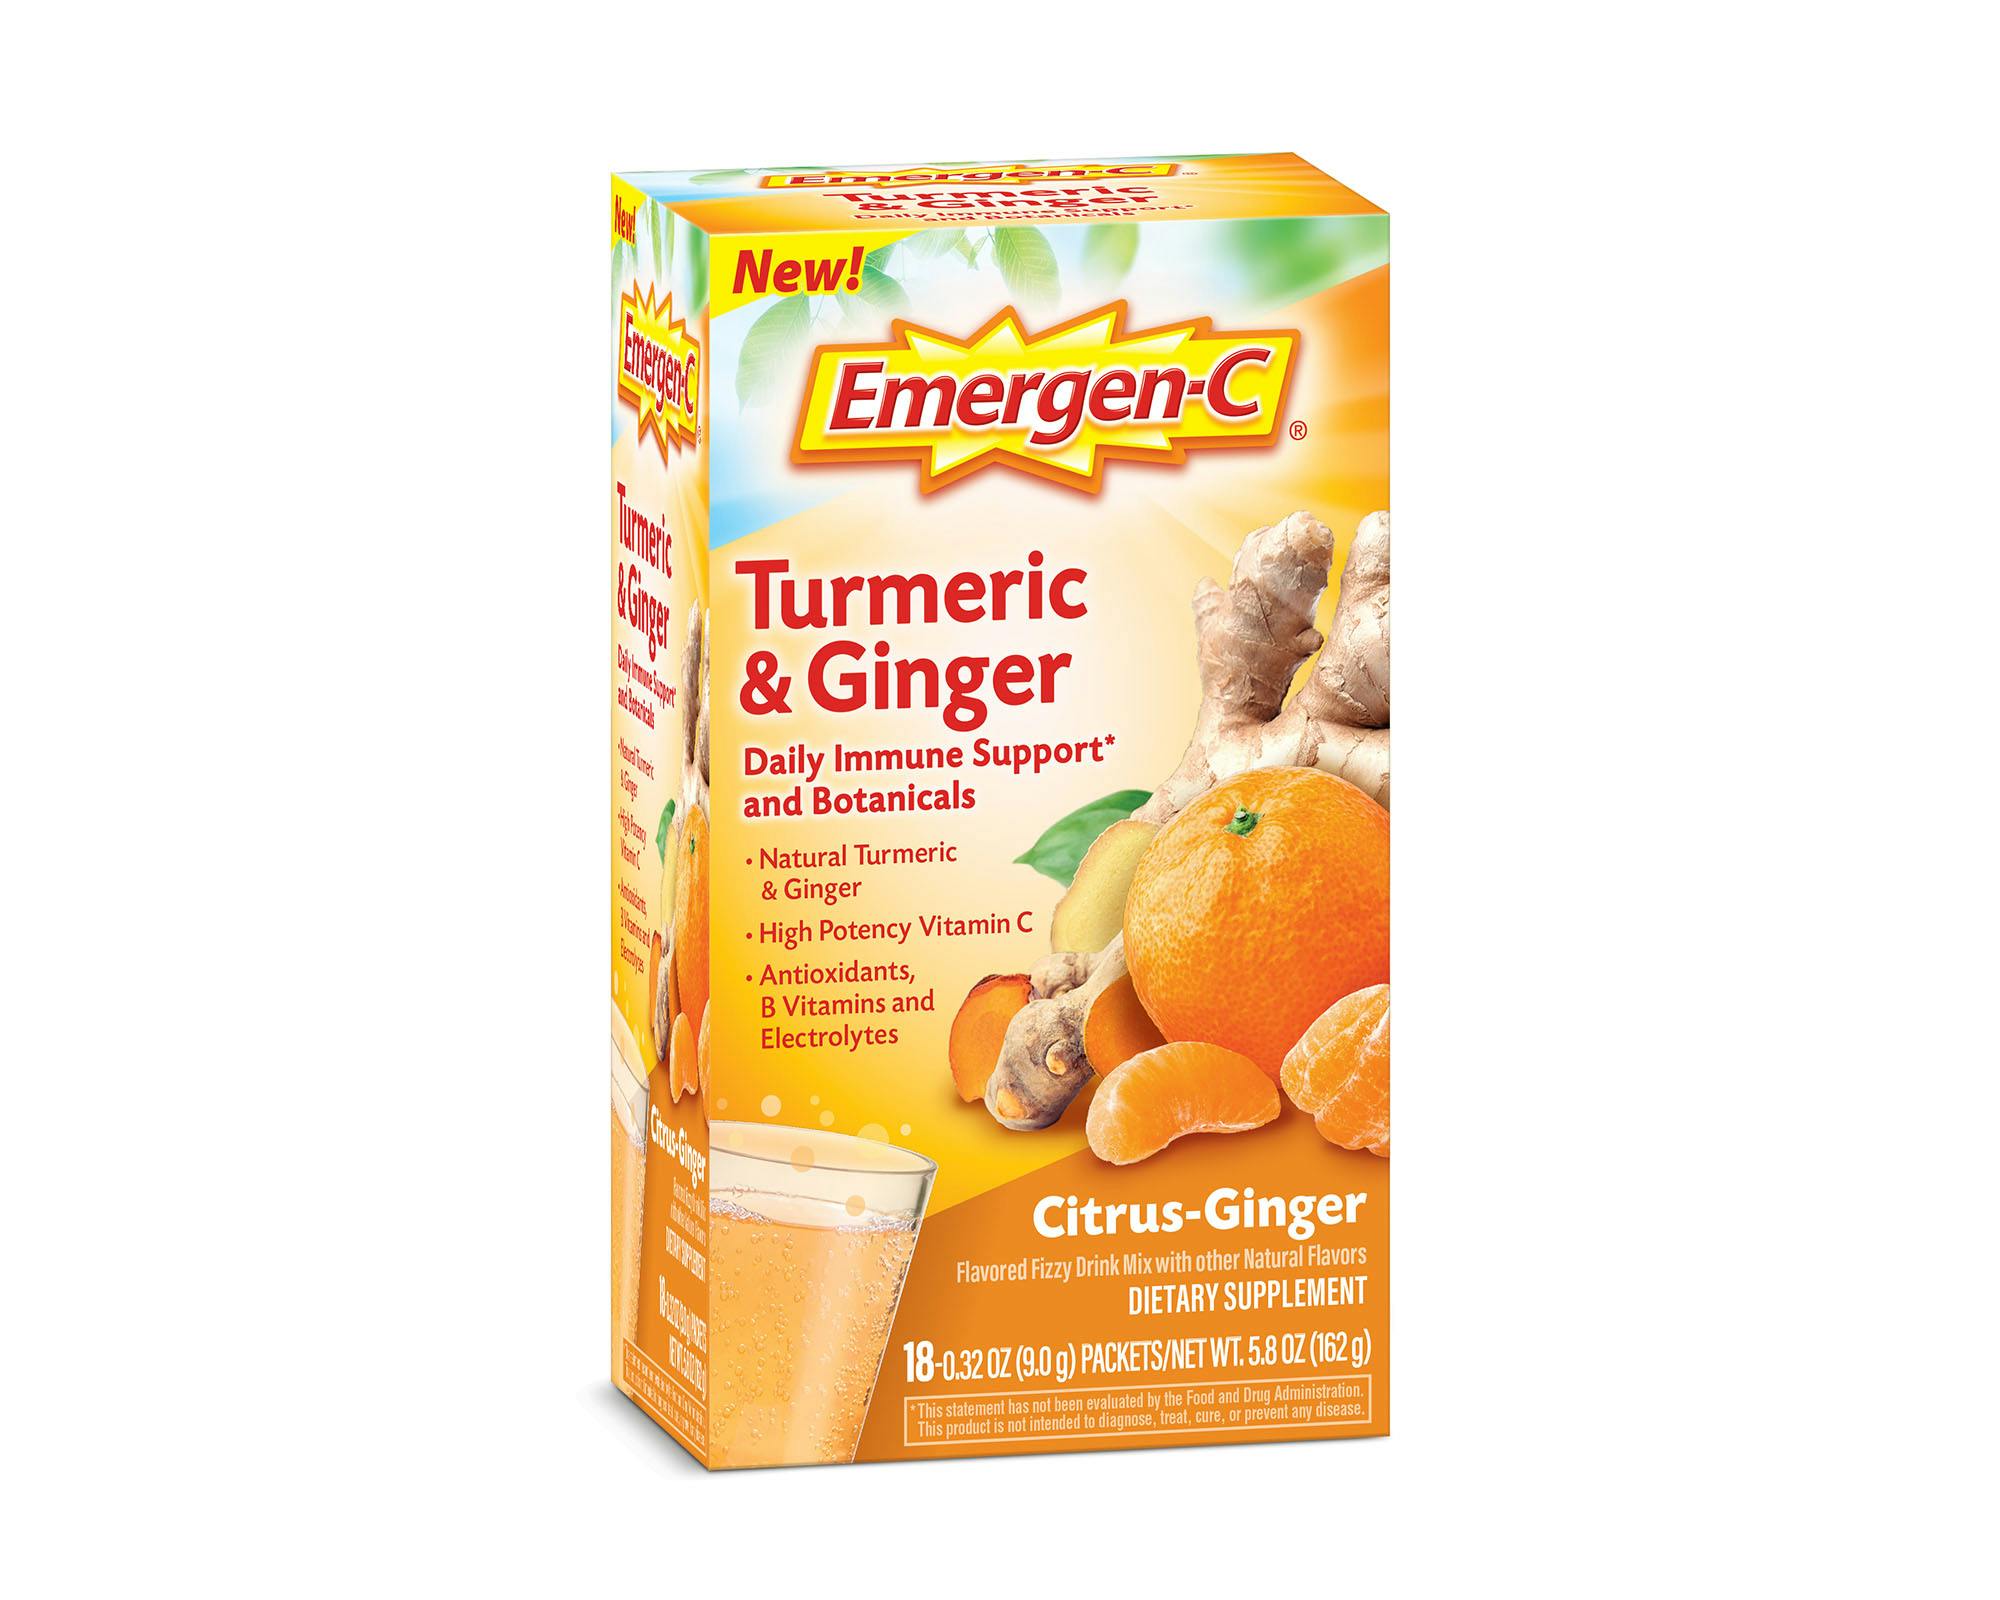 Turmeric & Ginger Botanicals Immune Support box angled view